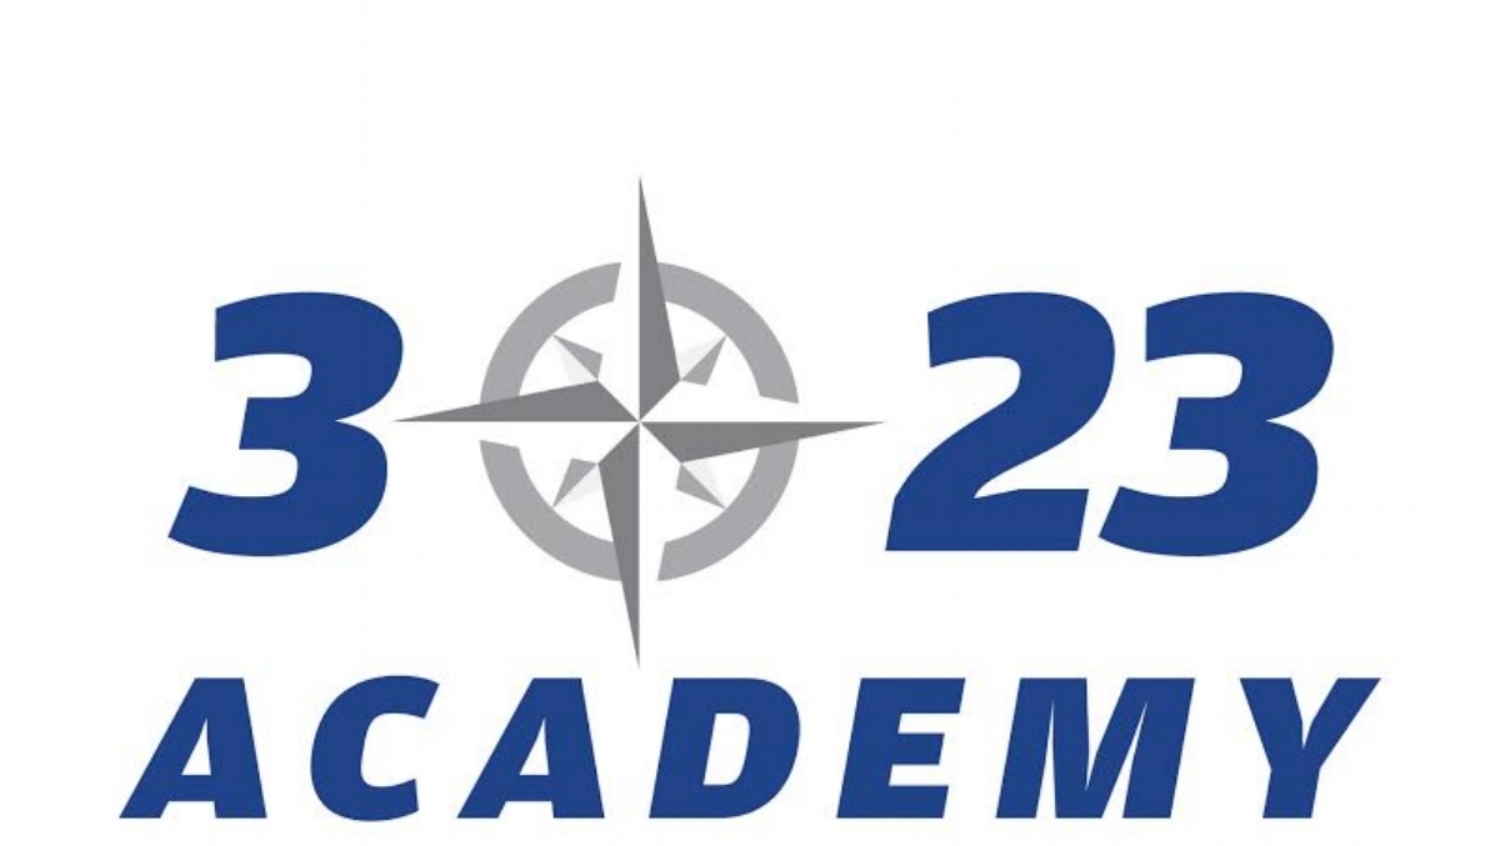 3:23 Academy